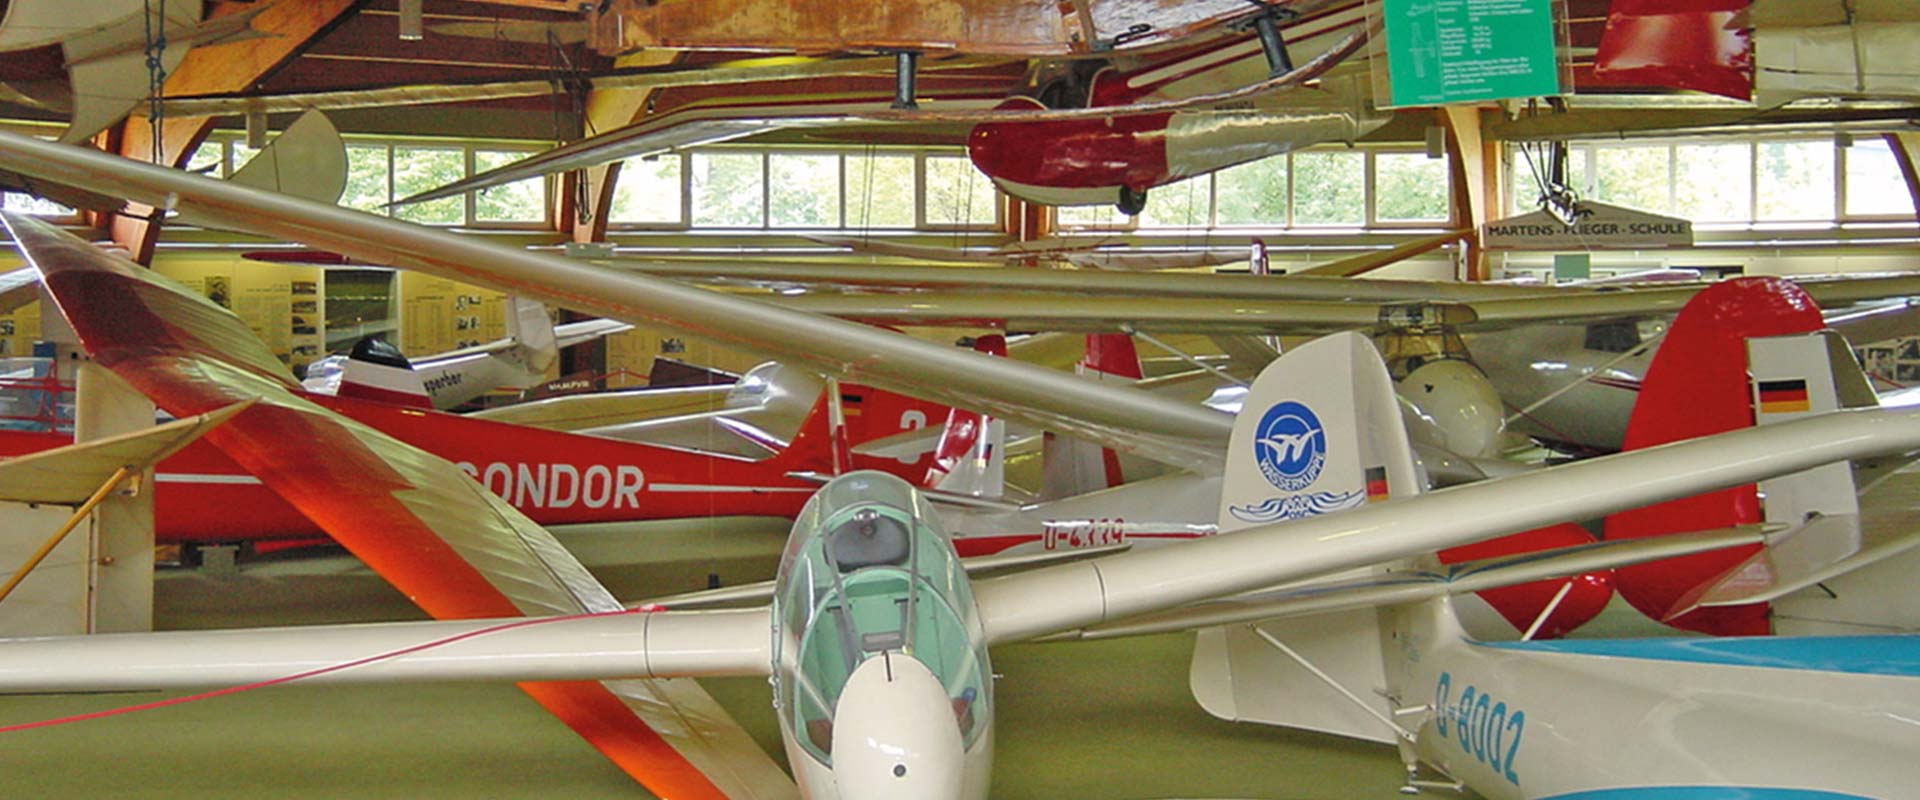 Segelflugmuseum Wasserkuppe